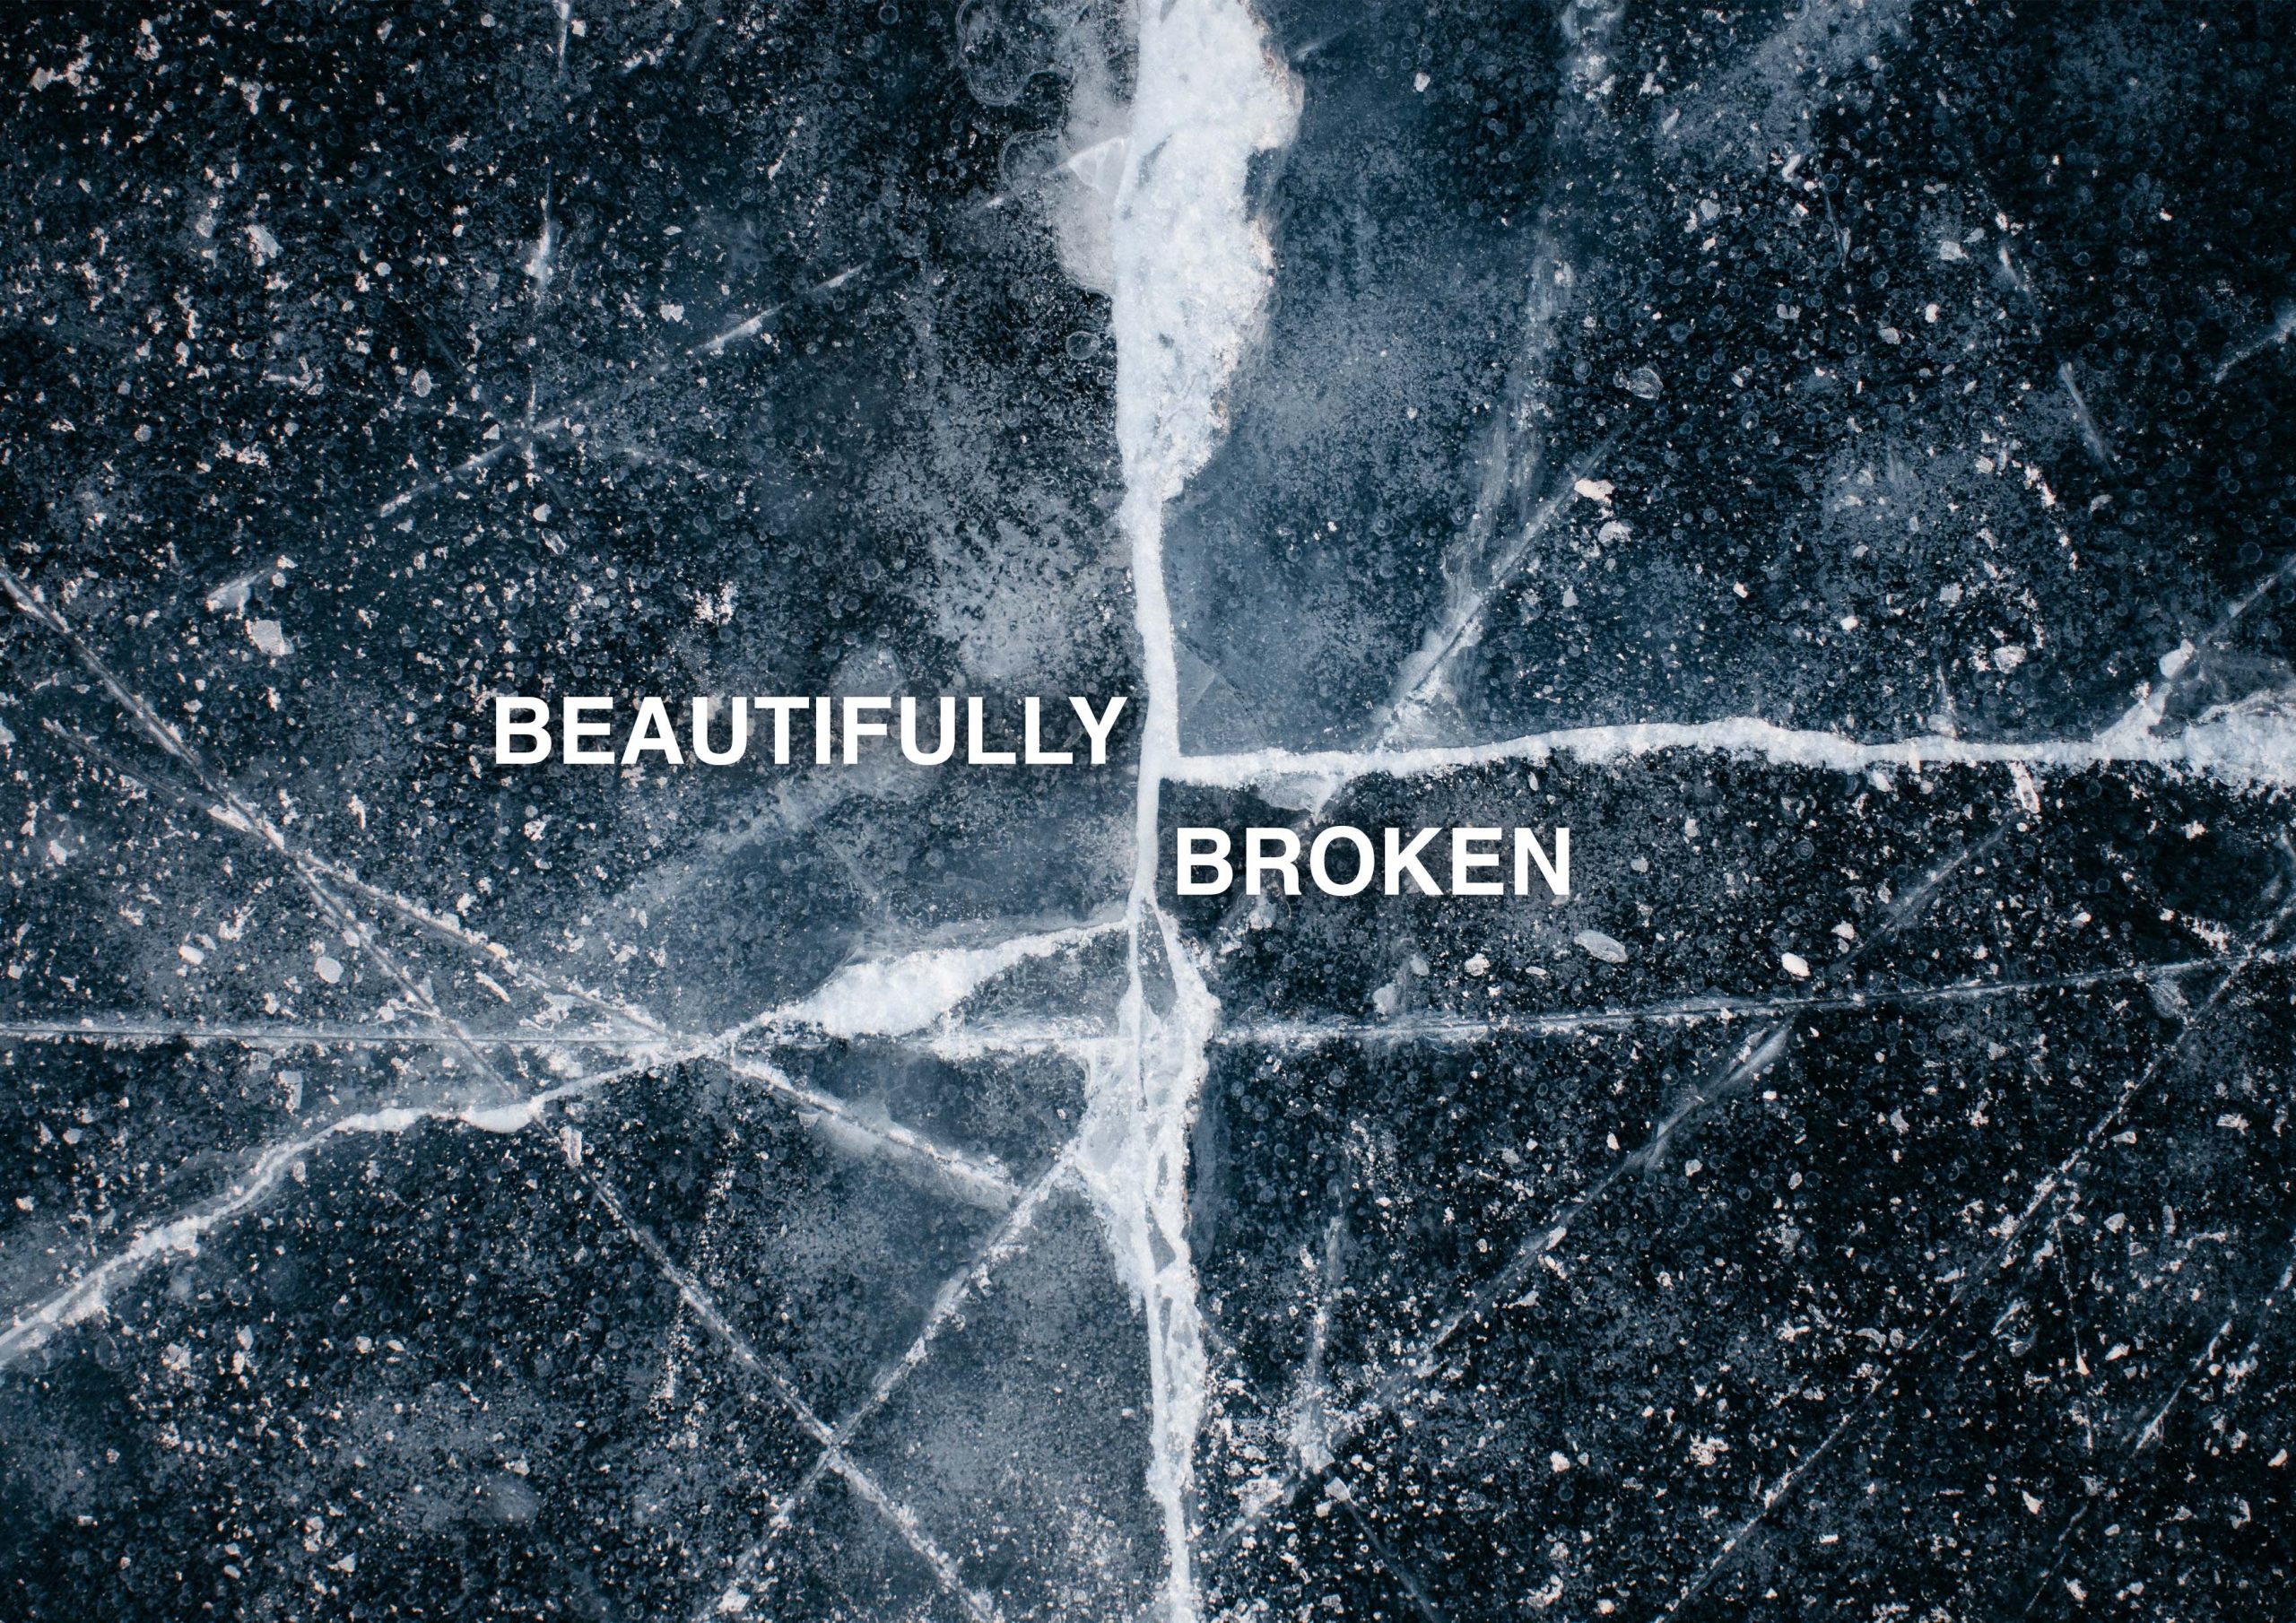 Beautifully broken